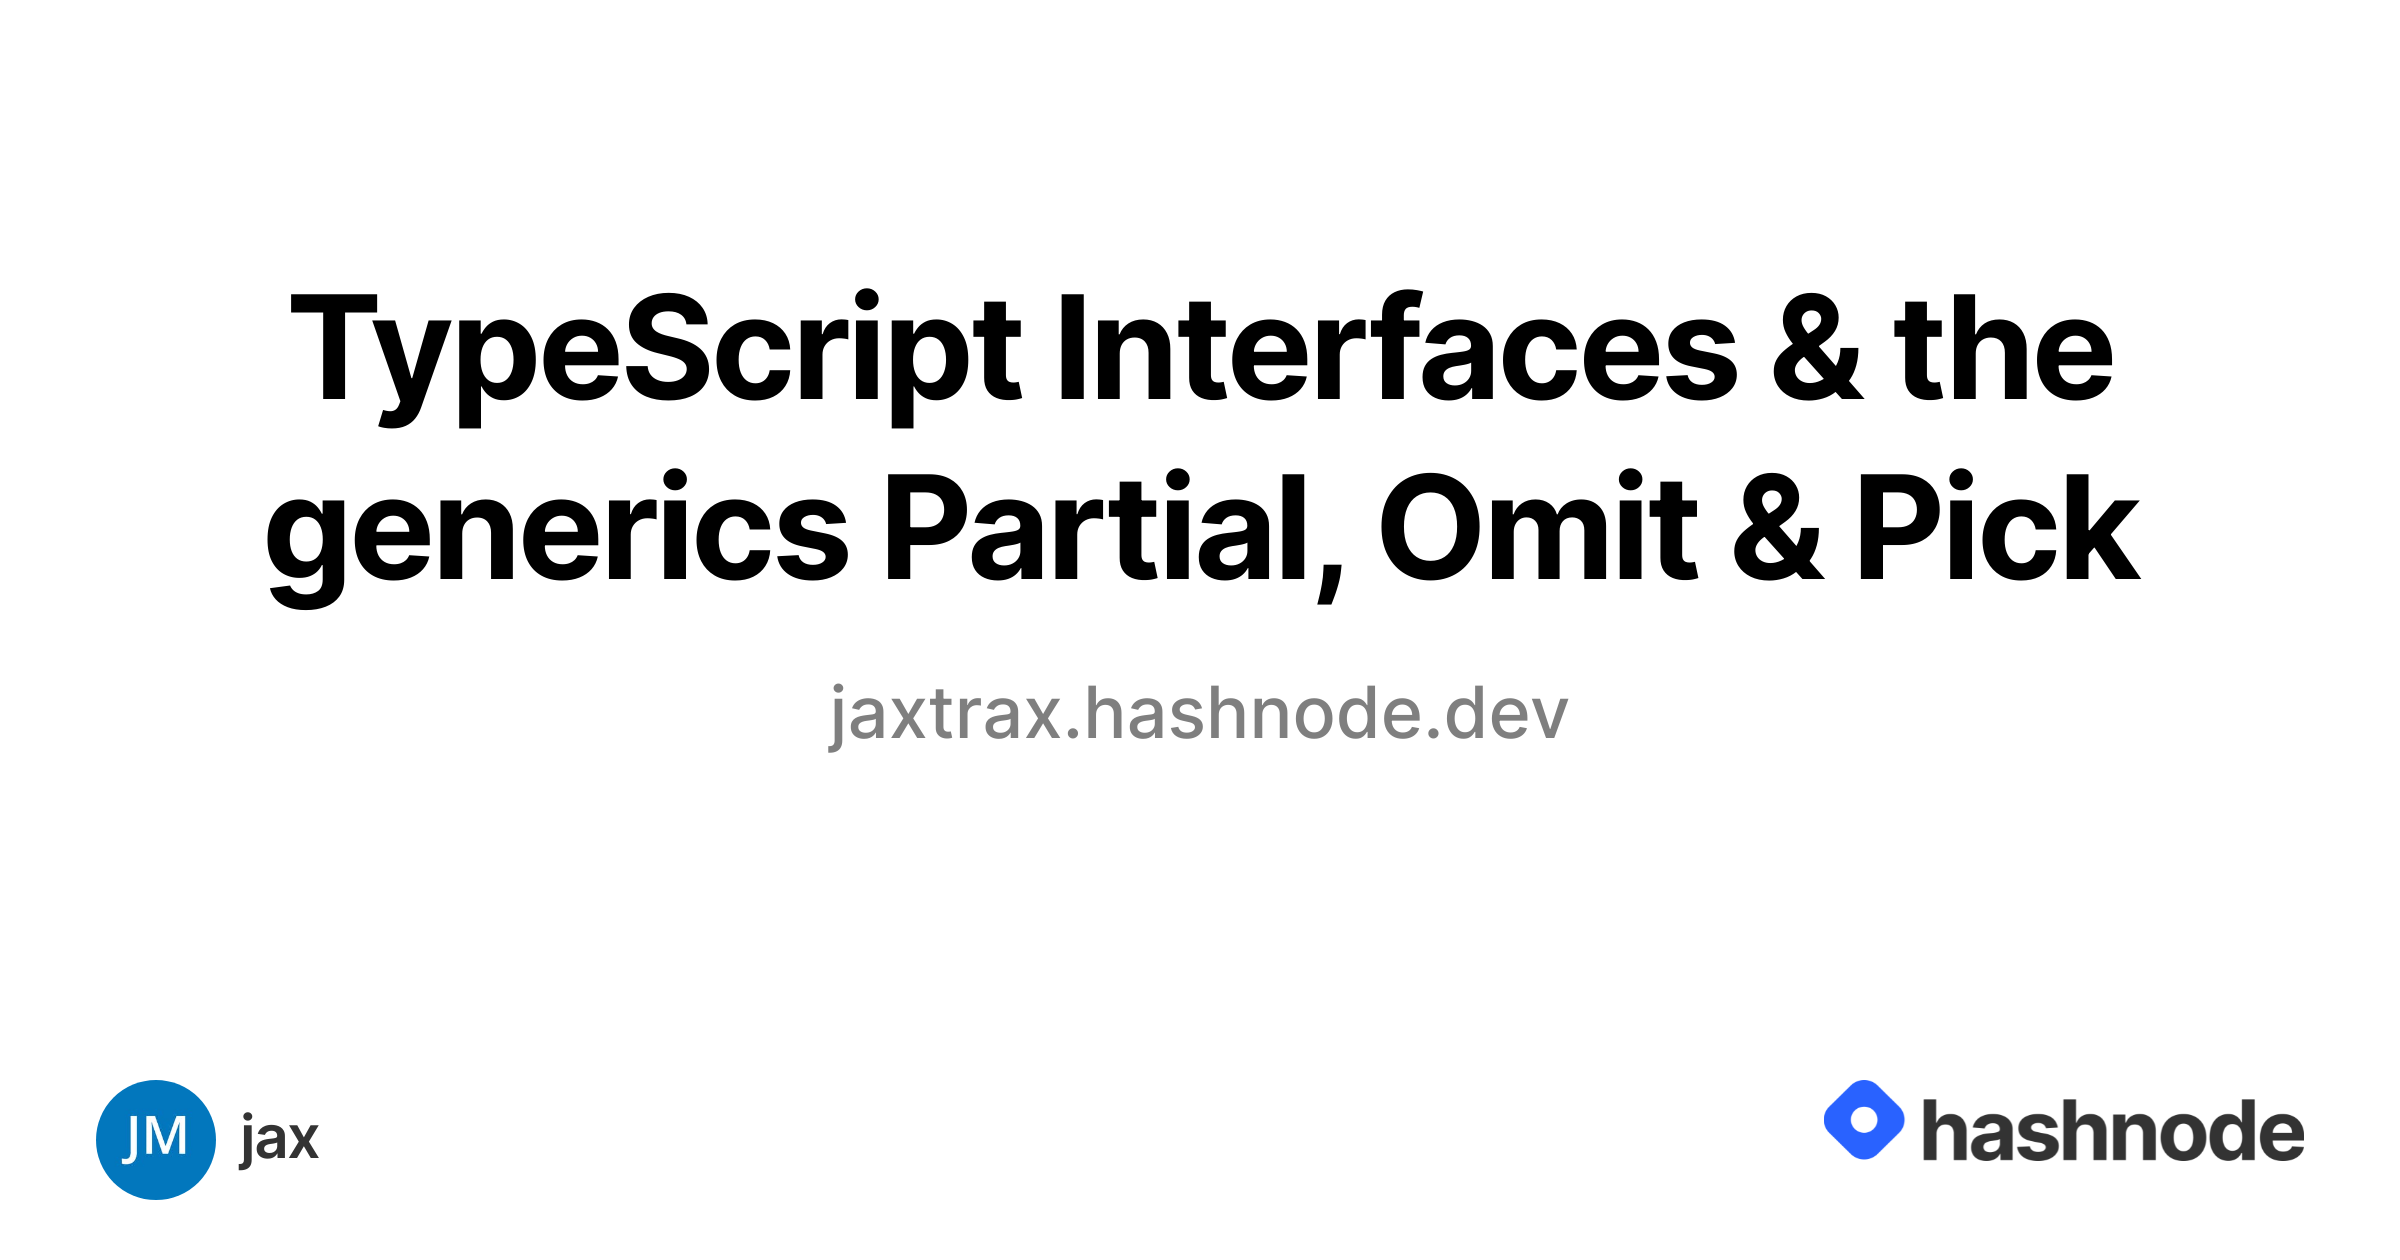 TypeScript Interfaces & the generics Partial, Omit & Pick